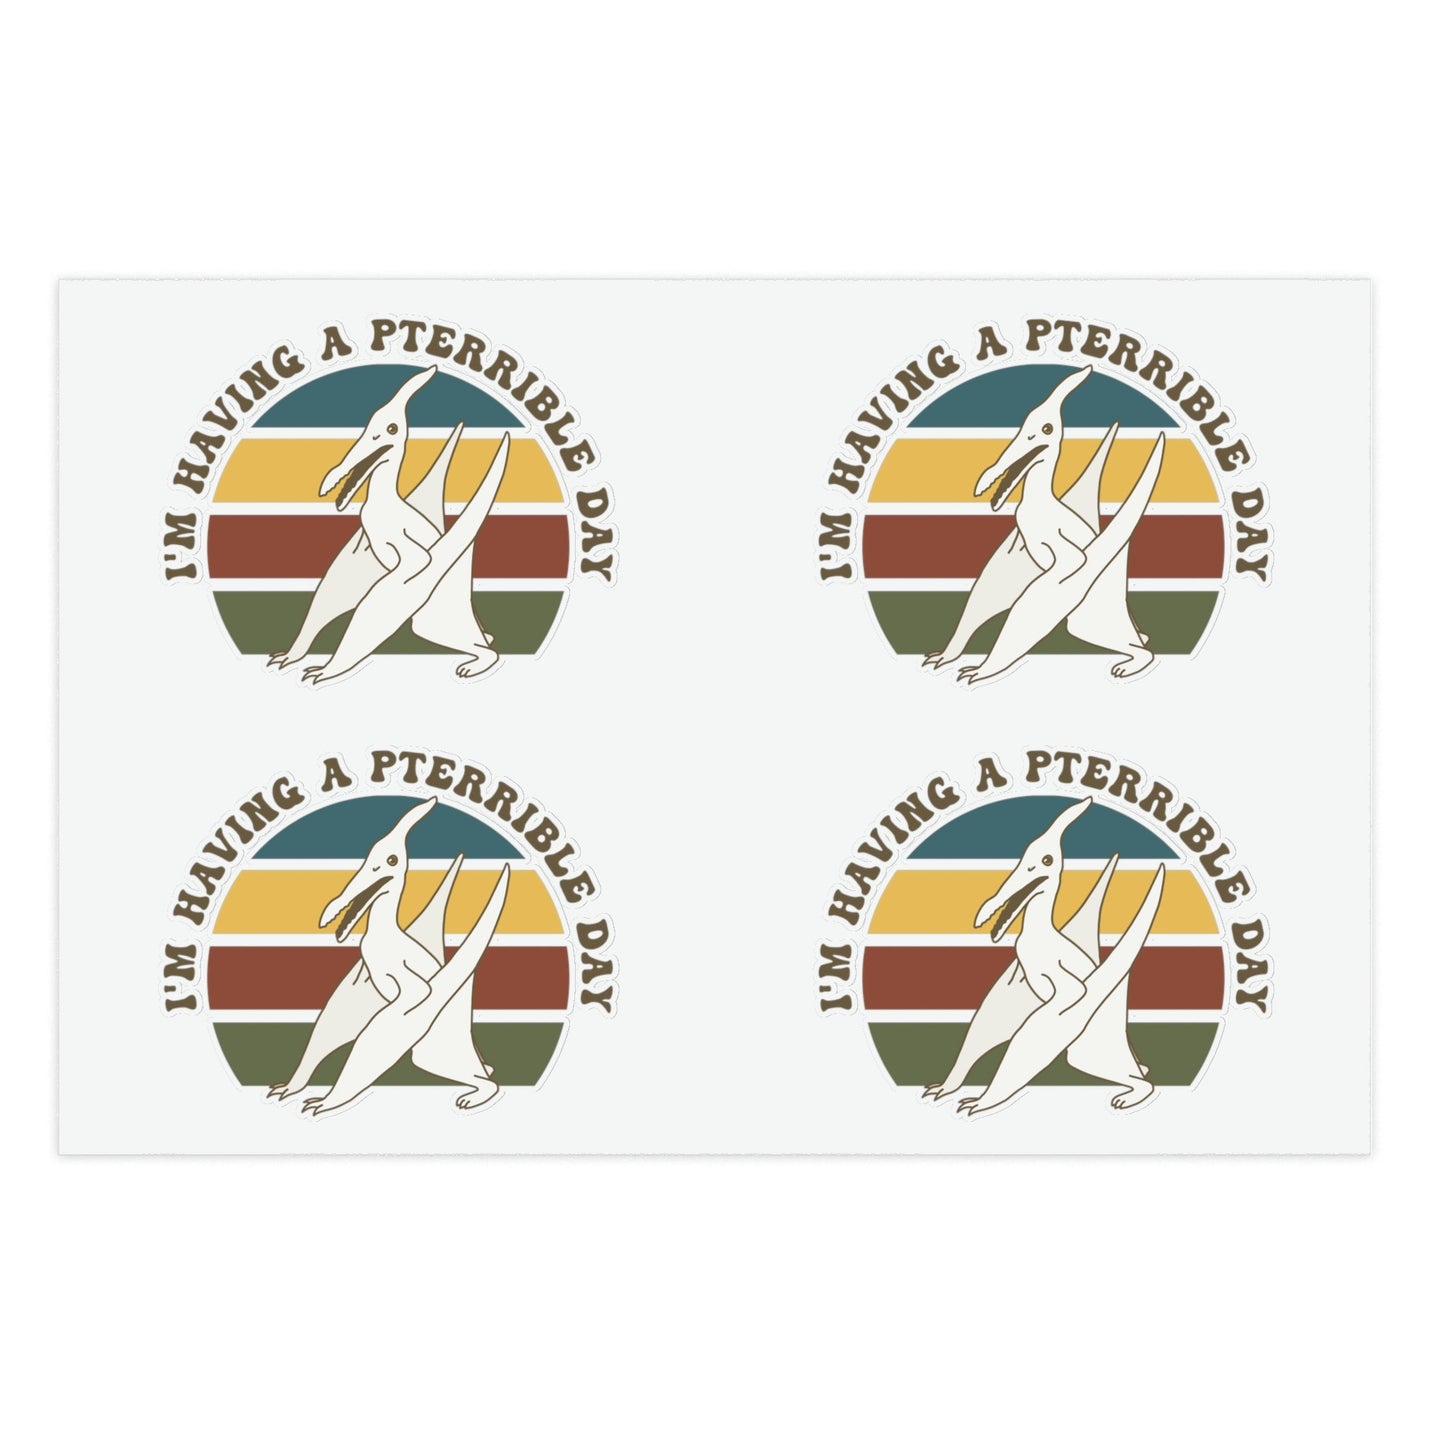 I'm Having A Pterrible Day | Sticker Sheets - Detezi Designs-20068665218944103966